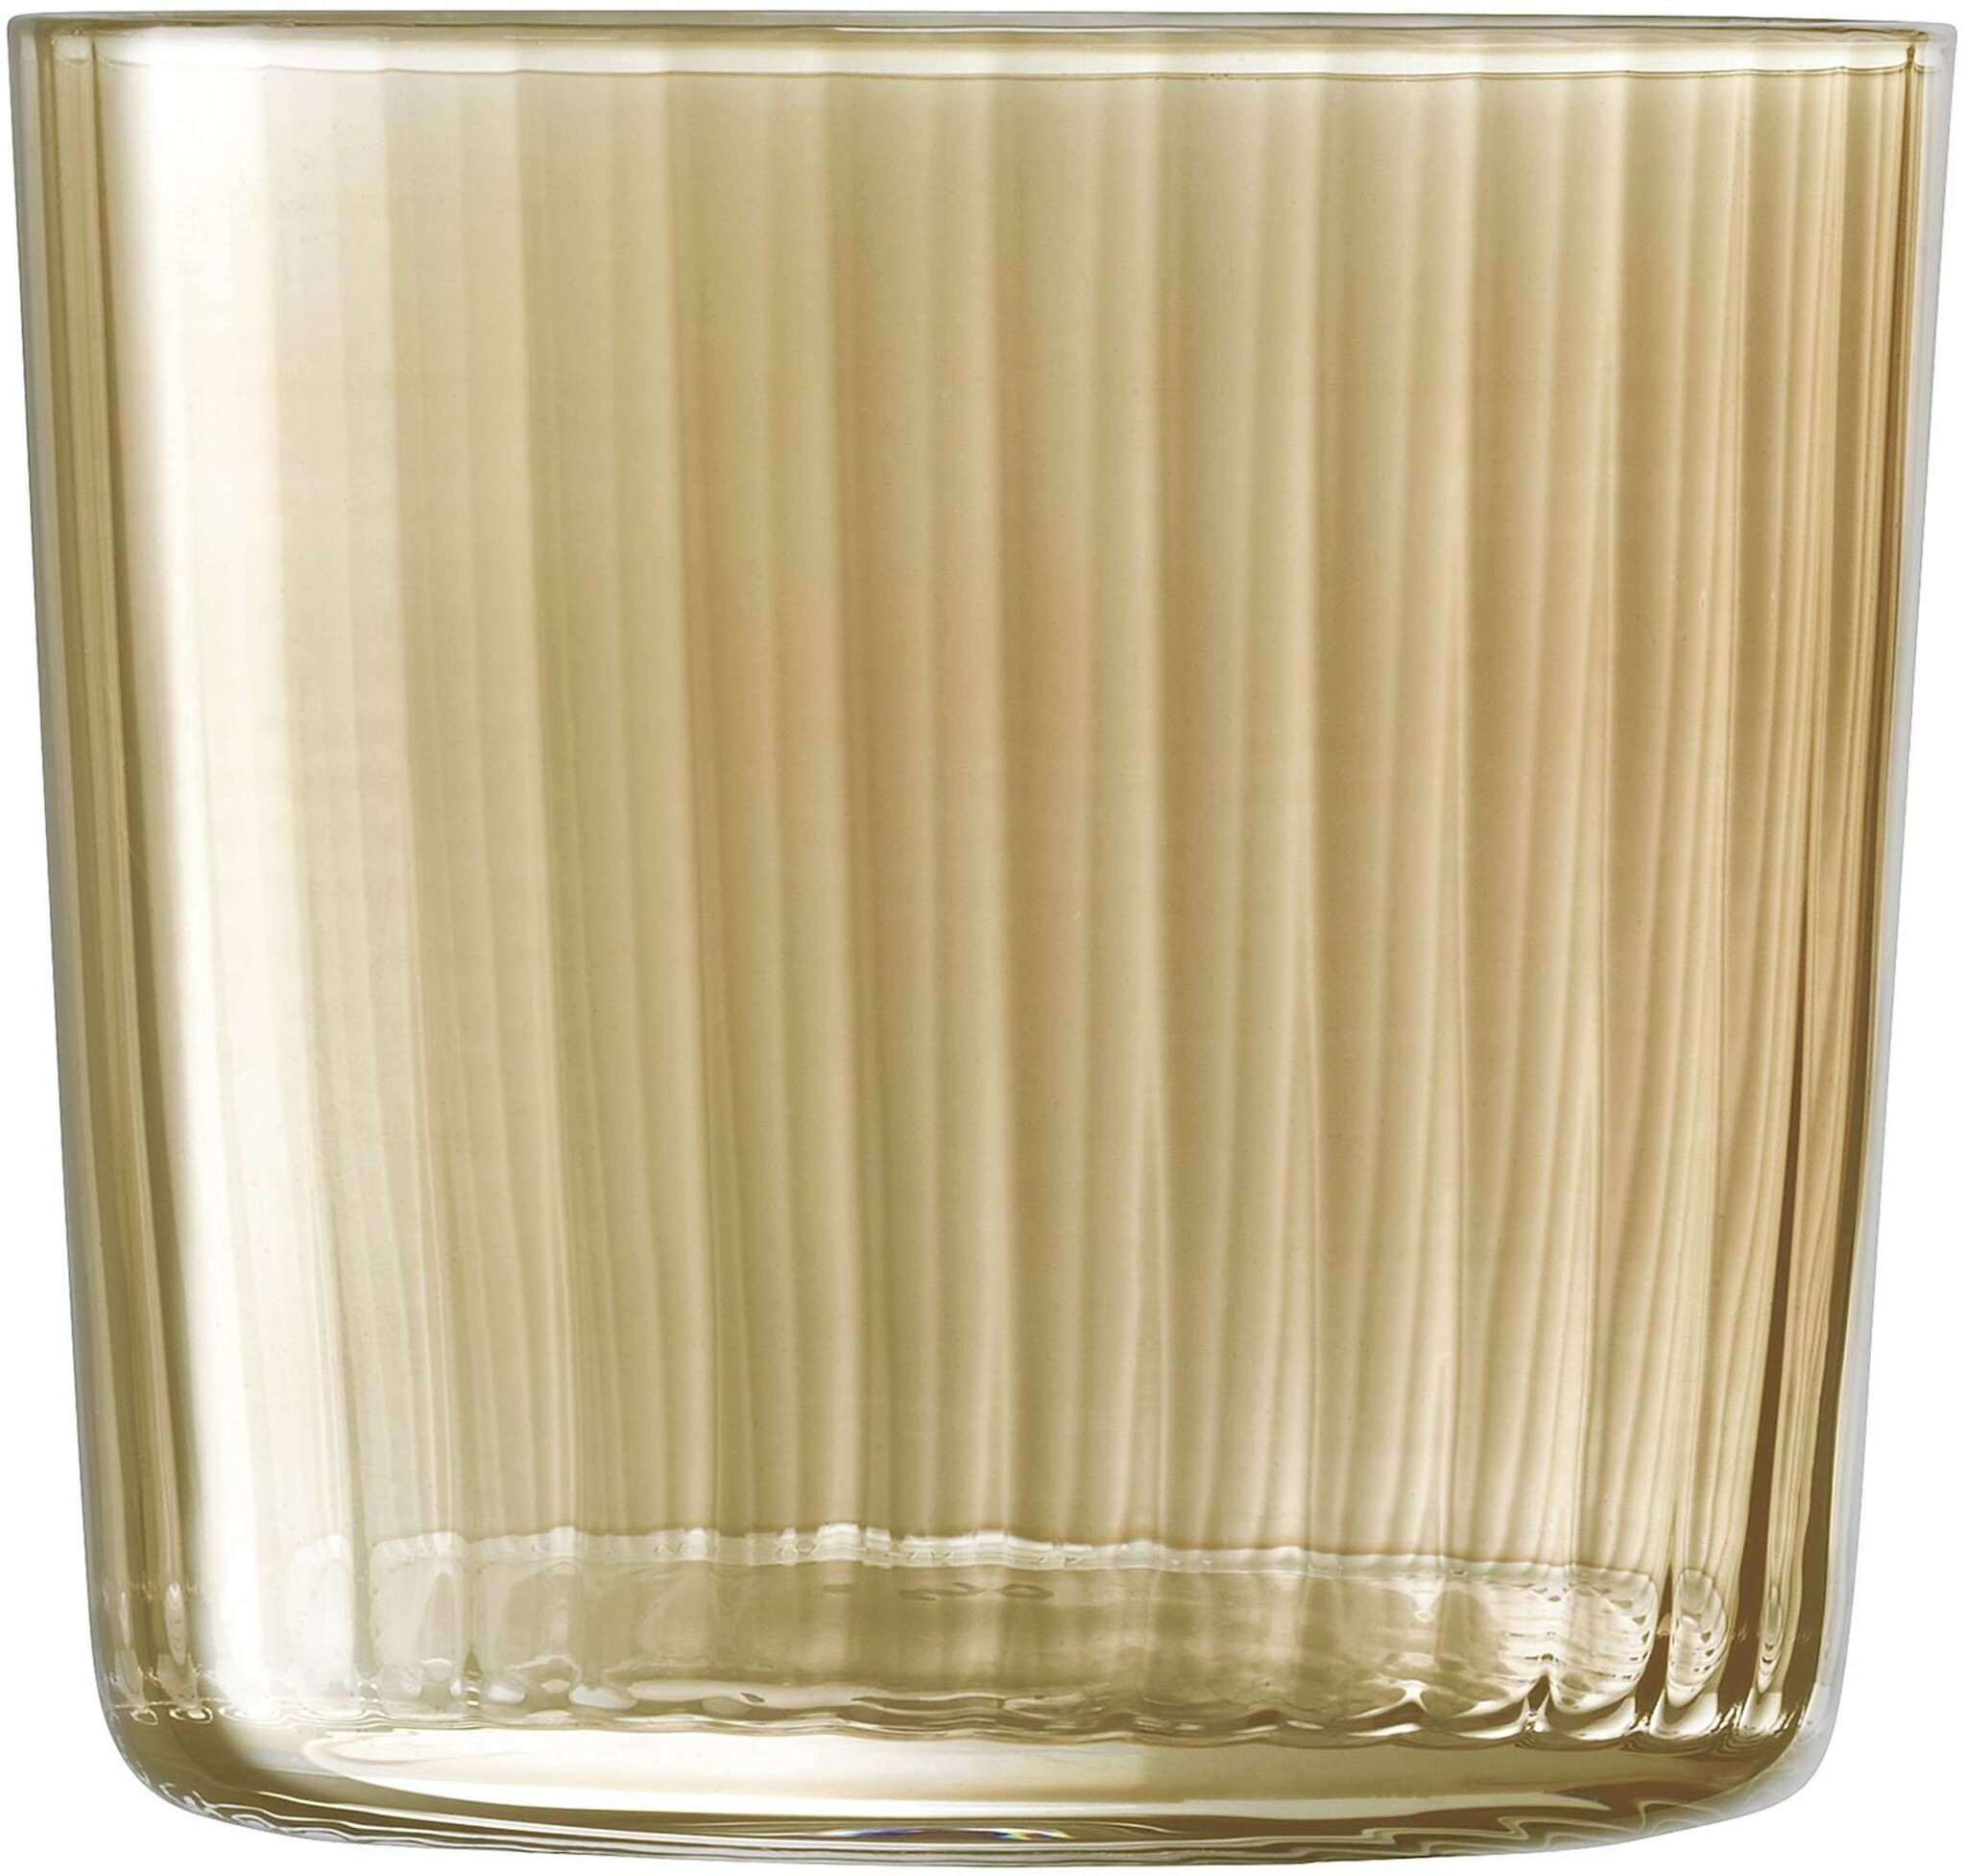 L.S.A. Gems Tumbler Glas 310 ml Set van 4 Stuks Assorti